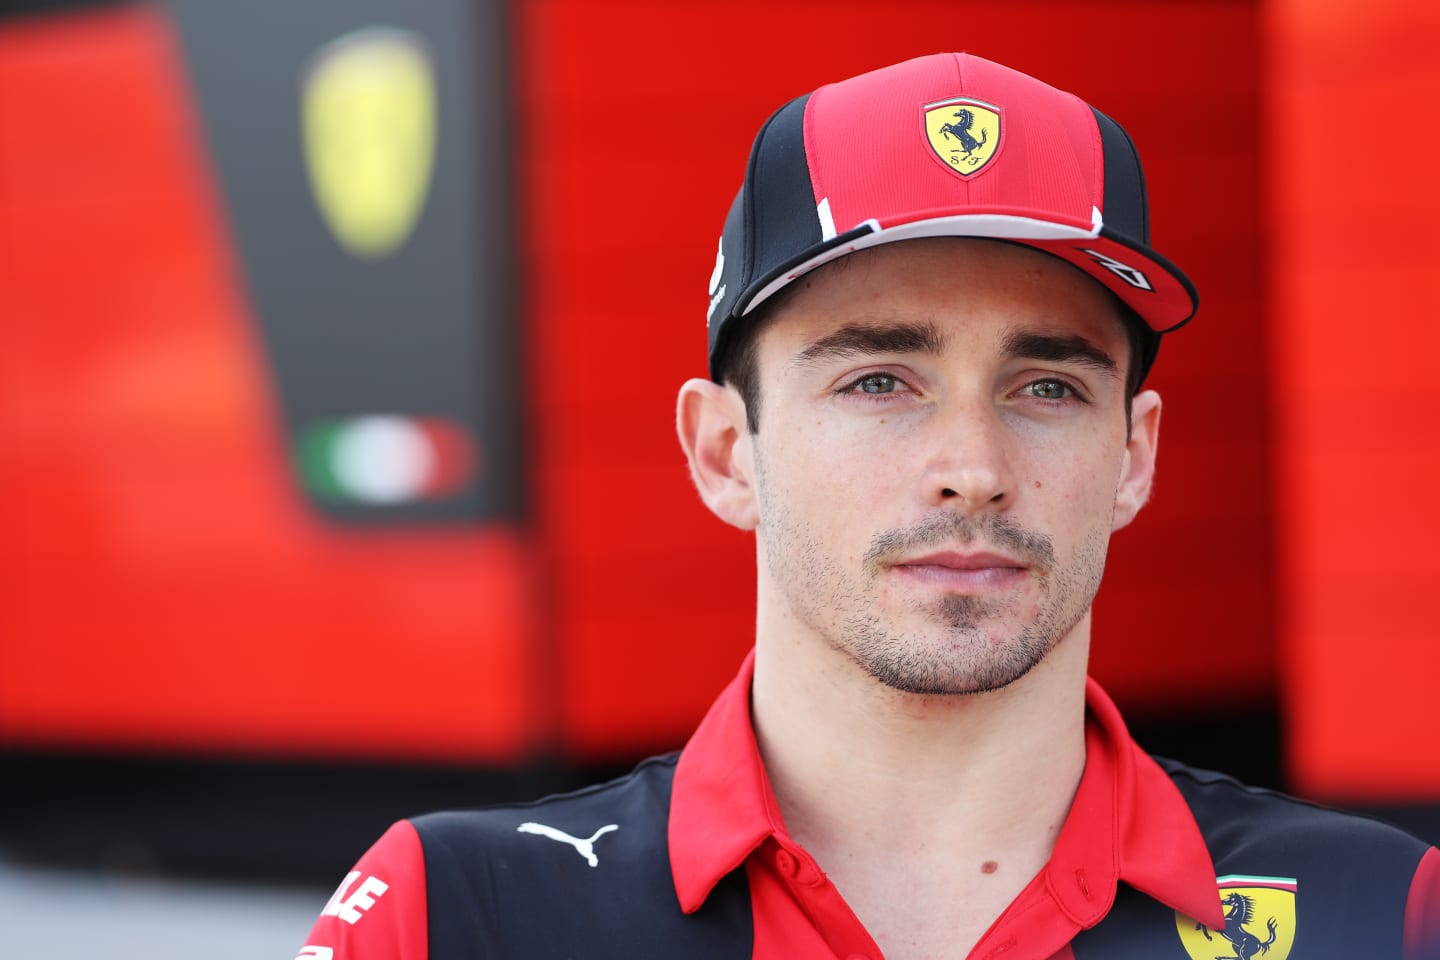 BAHRAIN, BAHRAIN - FEBRUARY 25: Charles Leclerc of Monaco and Ferrari looks on in the Paddock